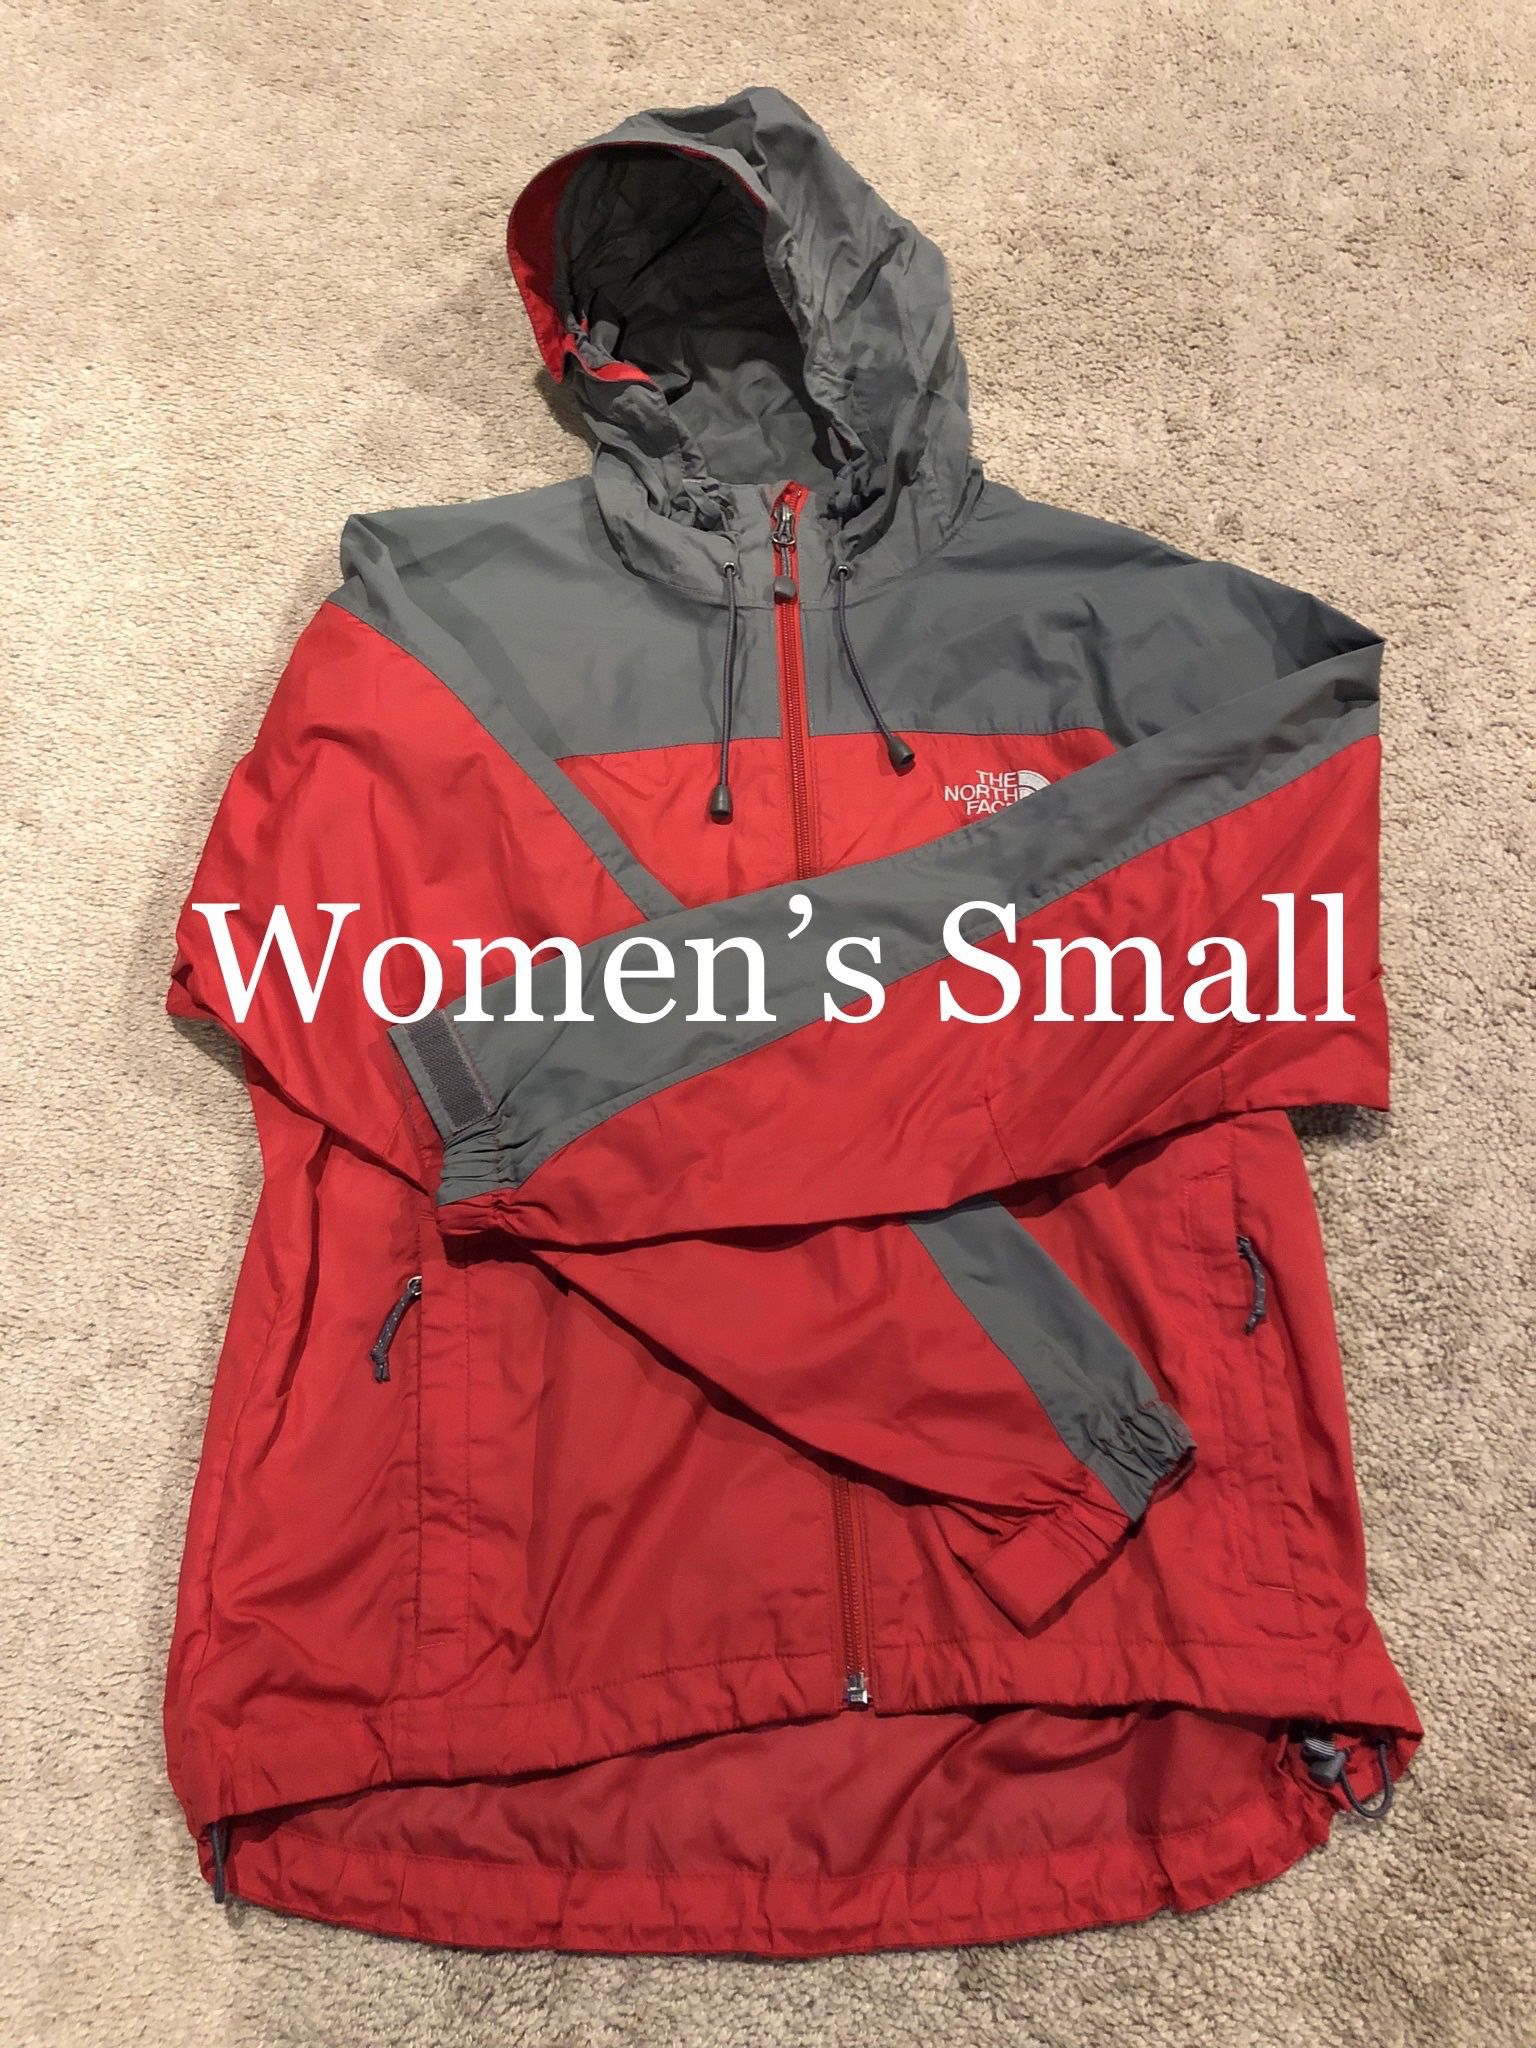 NORTH FACE / “Jordan” HyVent  w/ Hood Waterproof Jacket Coat / SIZE: Women’s Small (S) / Like New w/o Tags!! / Red & Grey